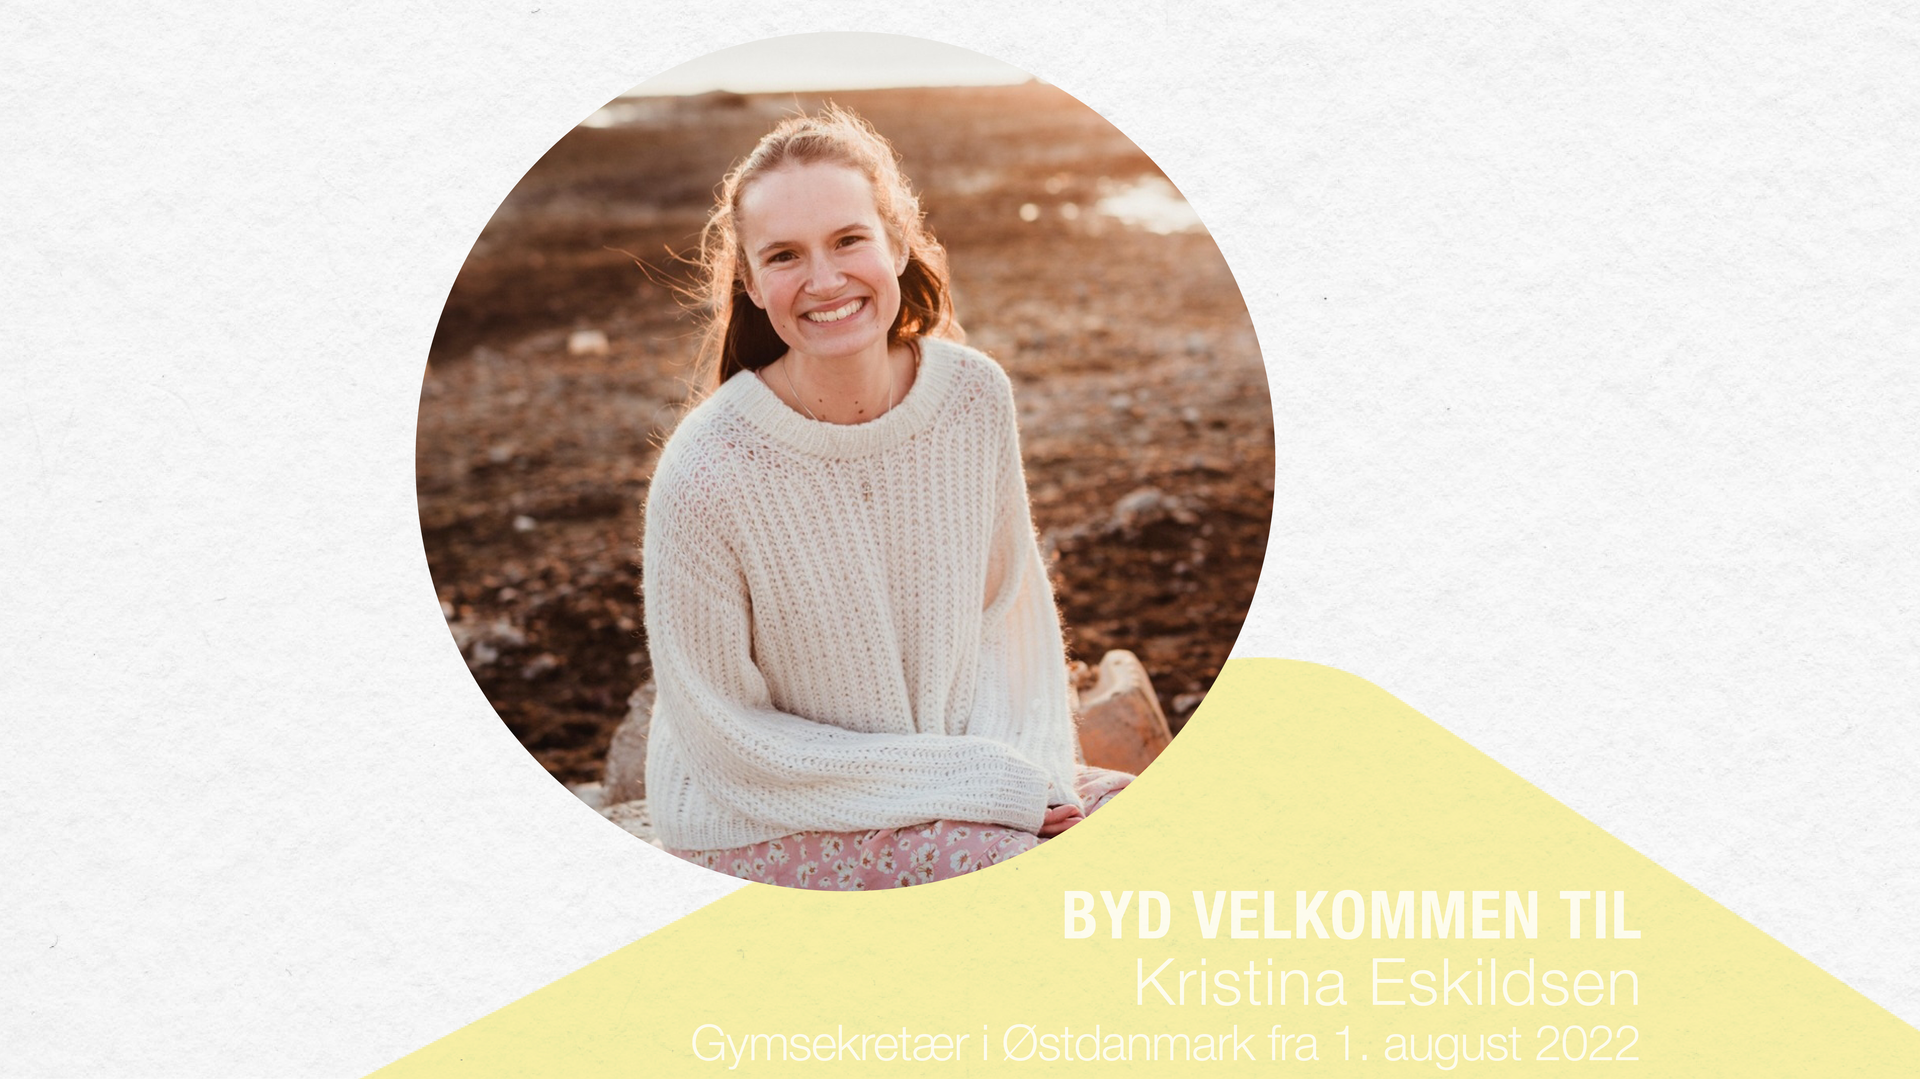 Byd et stort velkommen (tilbage) til: Kristina Eskildsen